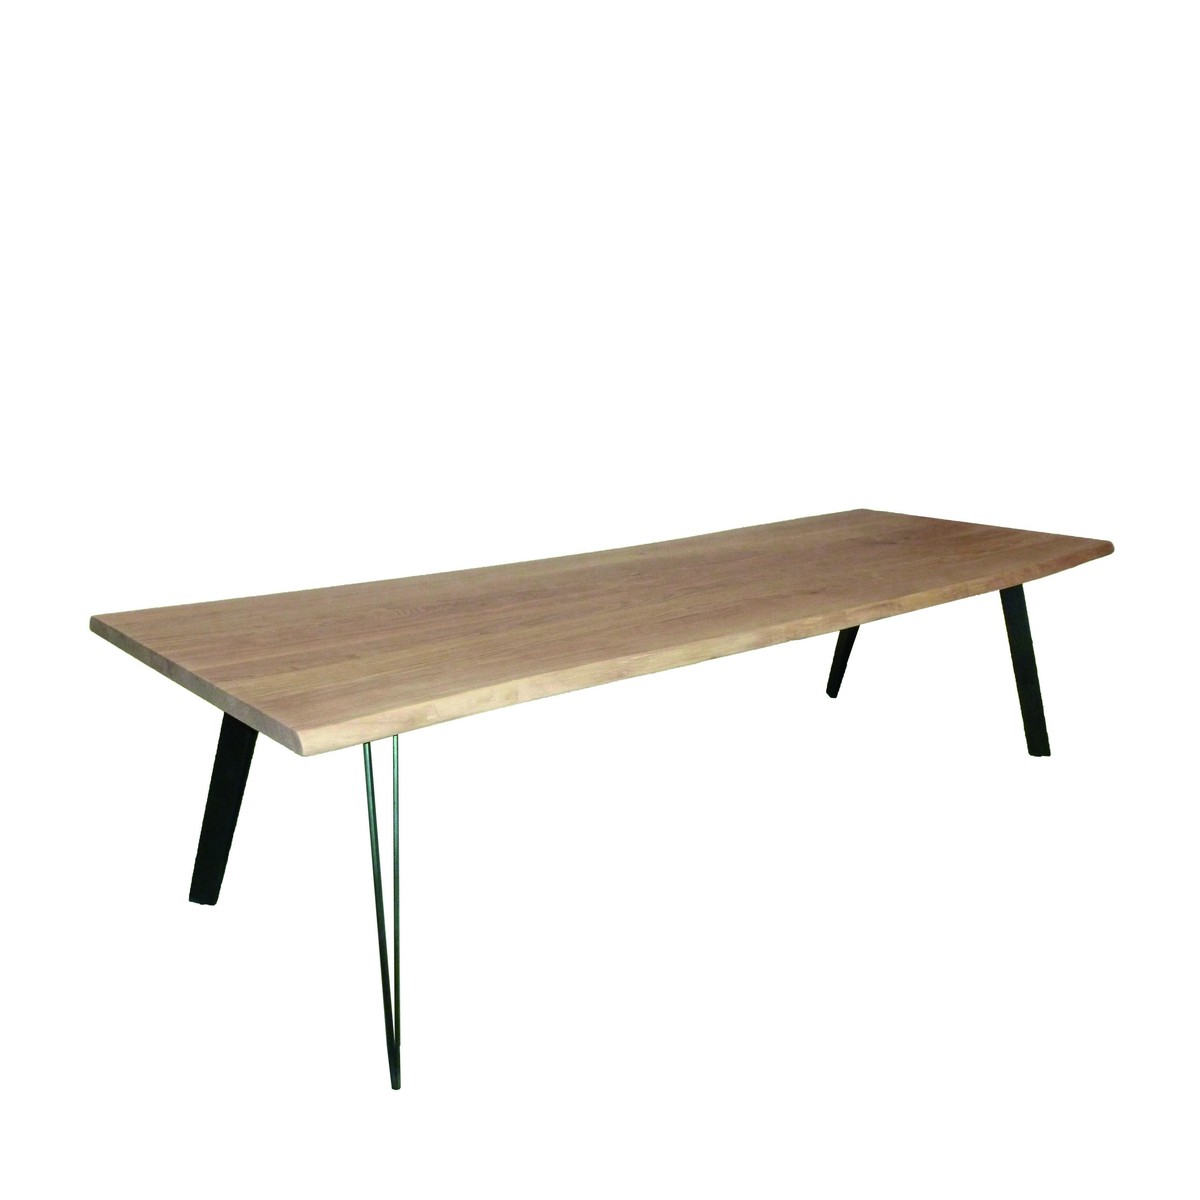   Table Cain Trunk rectangulaire  160x100x77cm